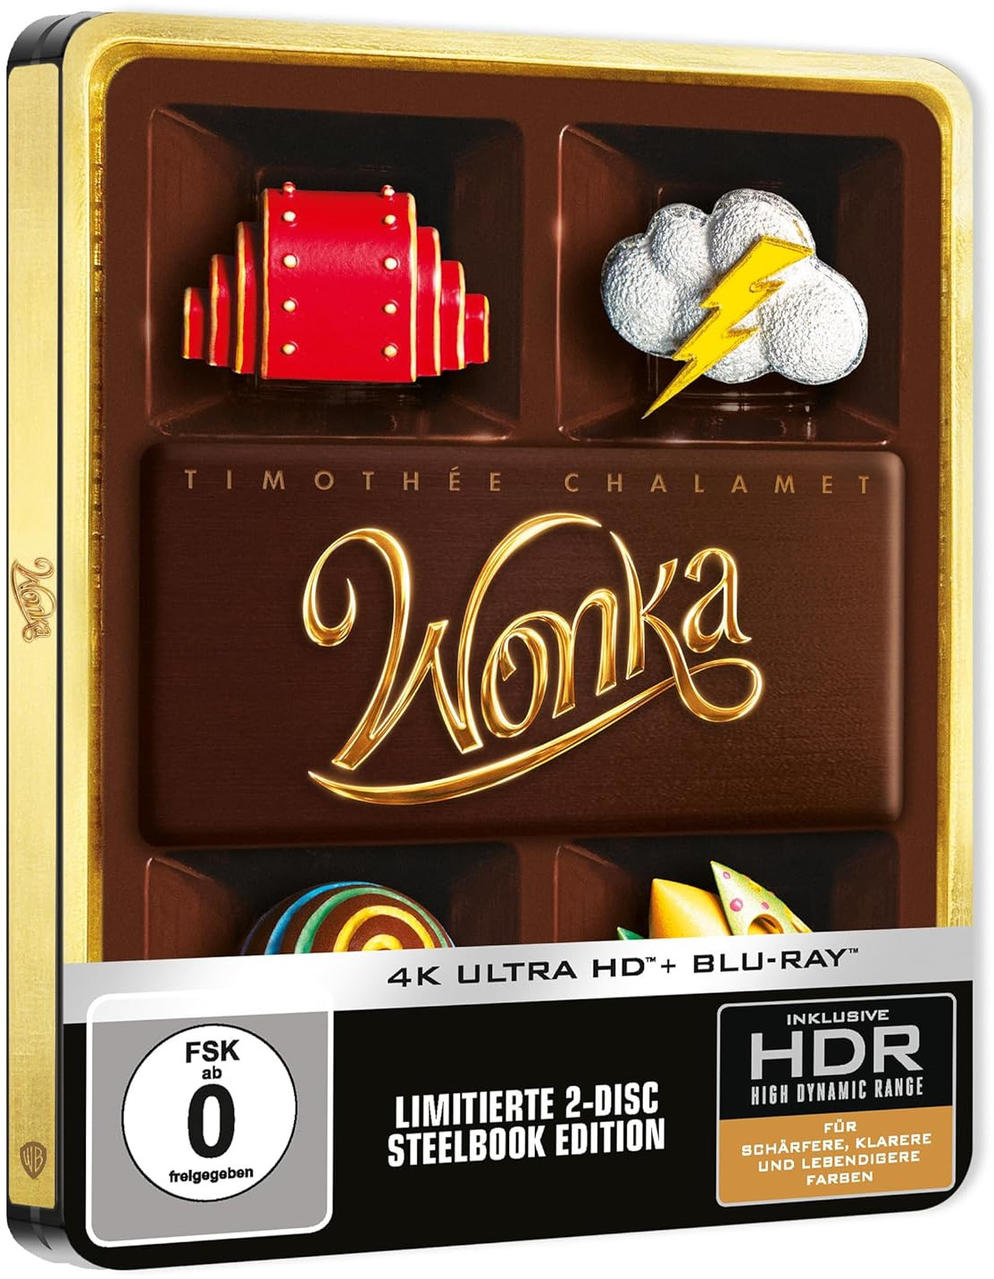 Wonka Exklusive Blu-ray Steelbookedition